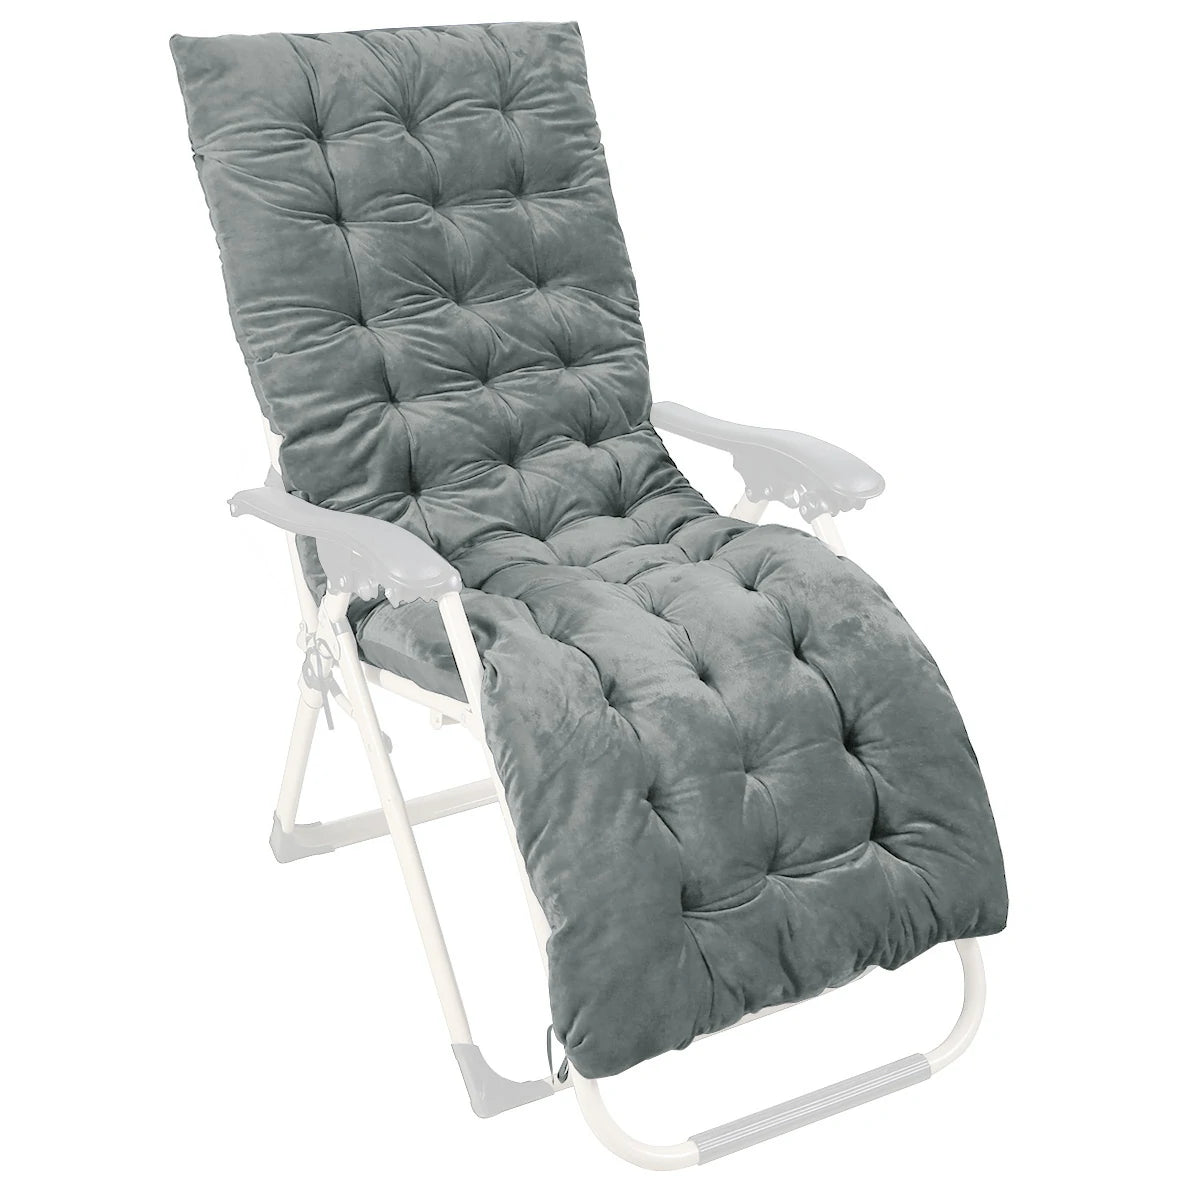 Thicker Soft Comfortable Chaise Lounge Chair Cushion